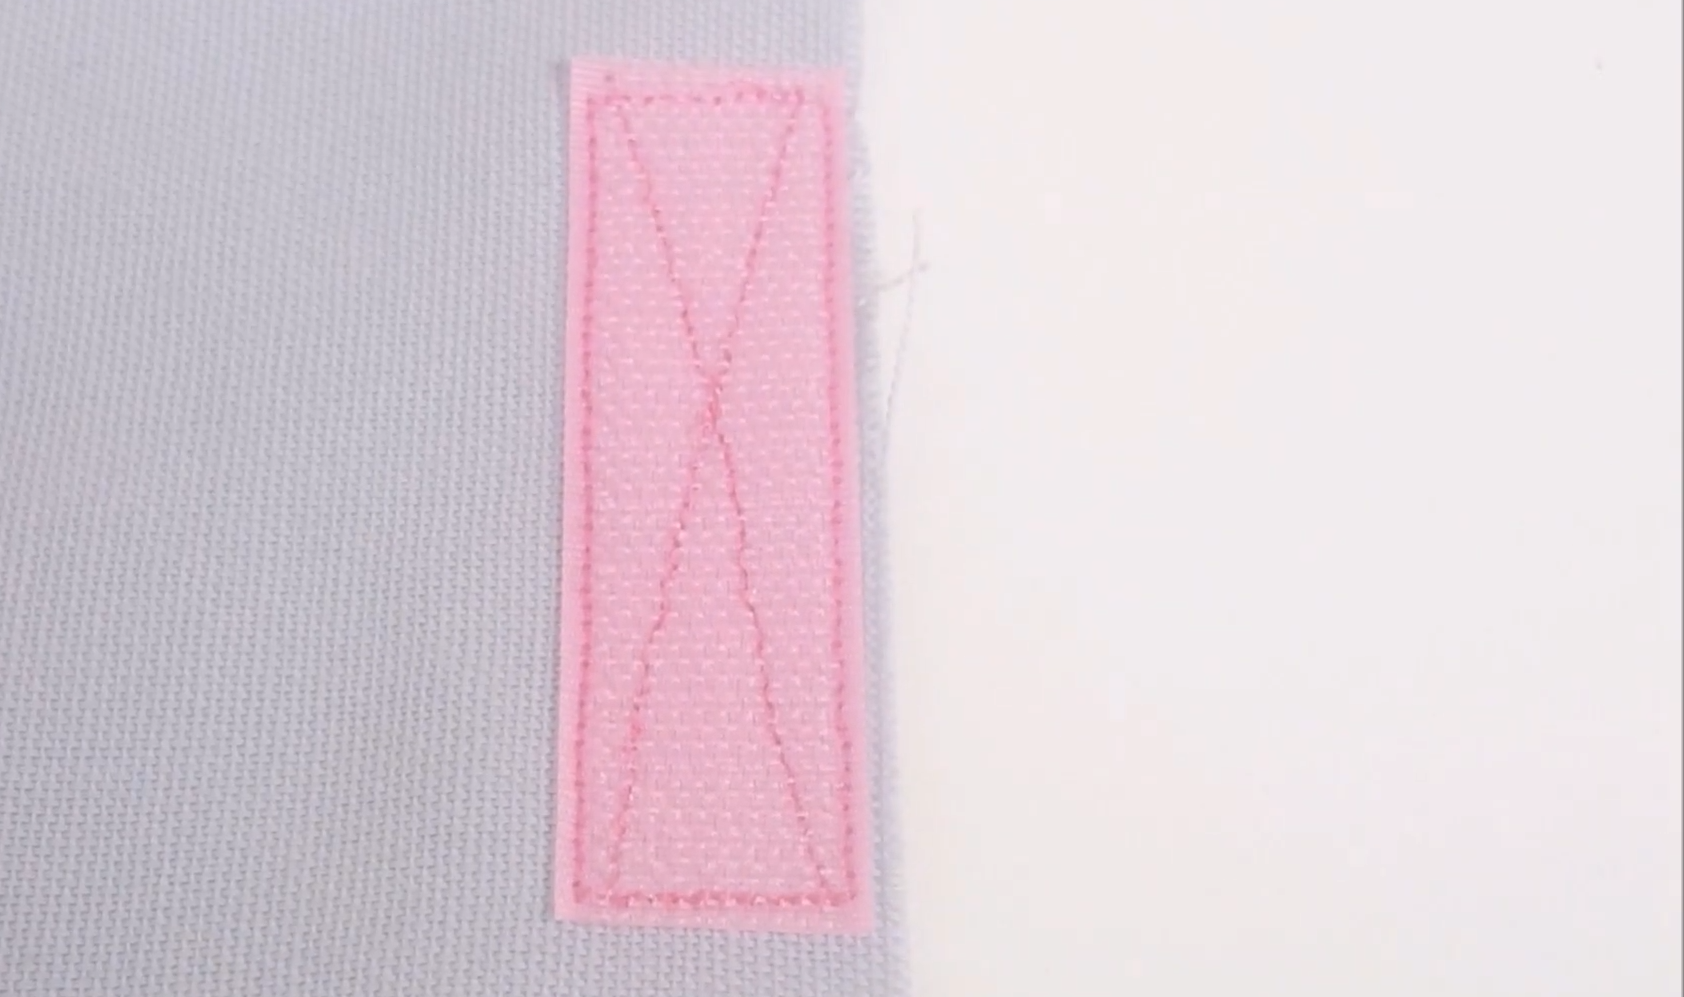 How to Sew on Velcro